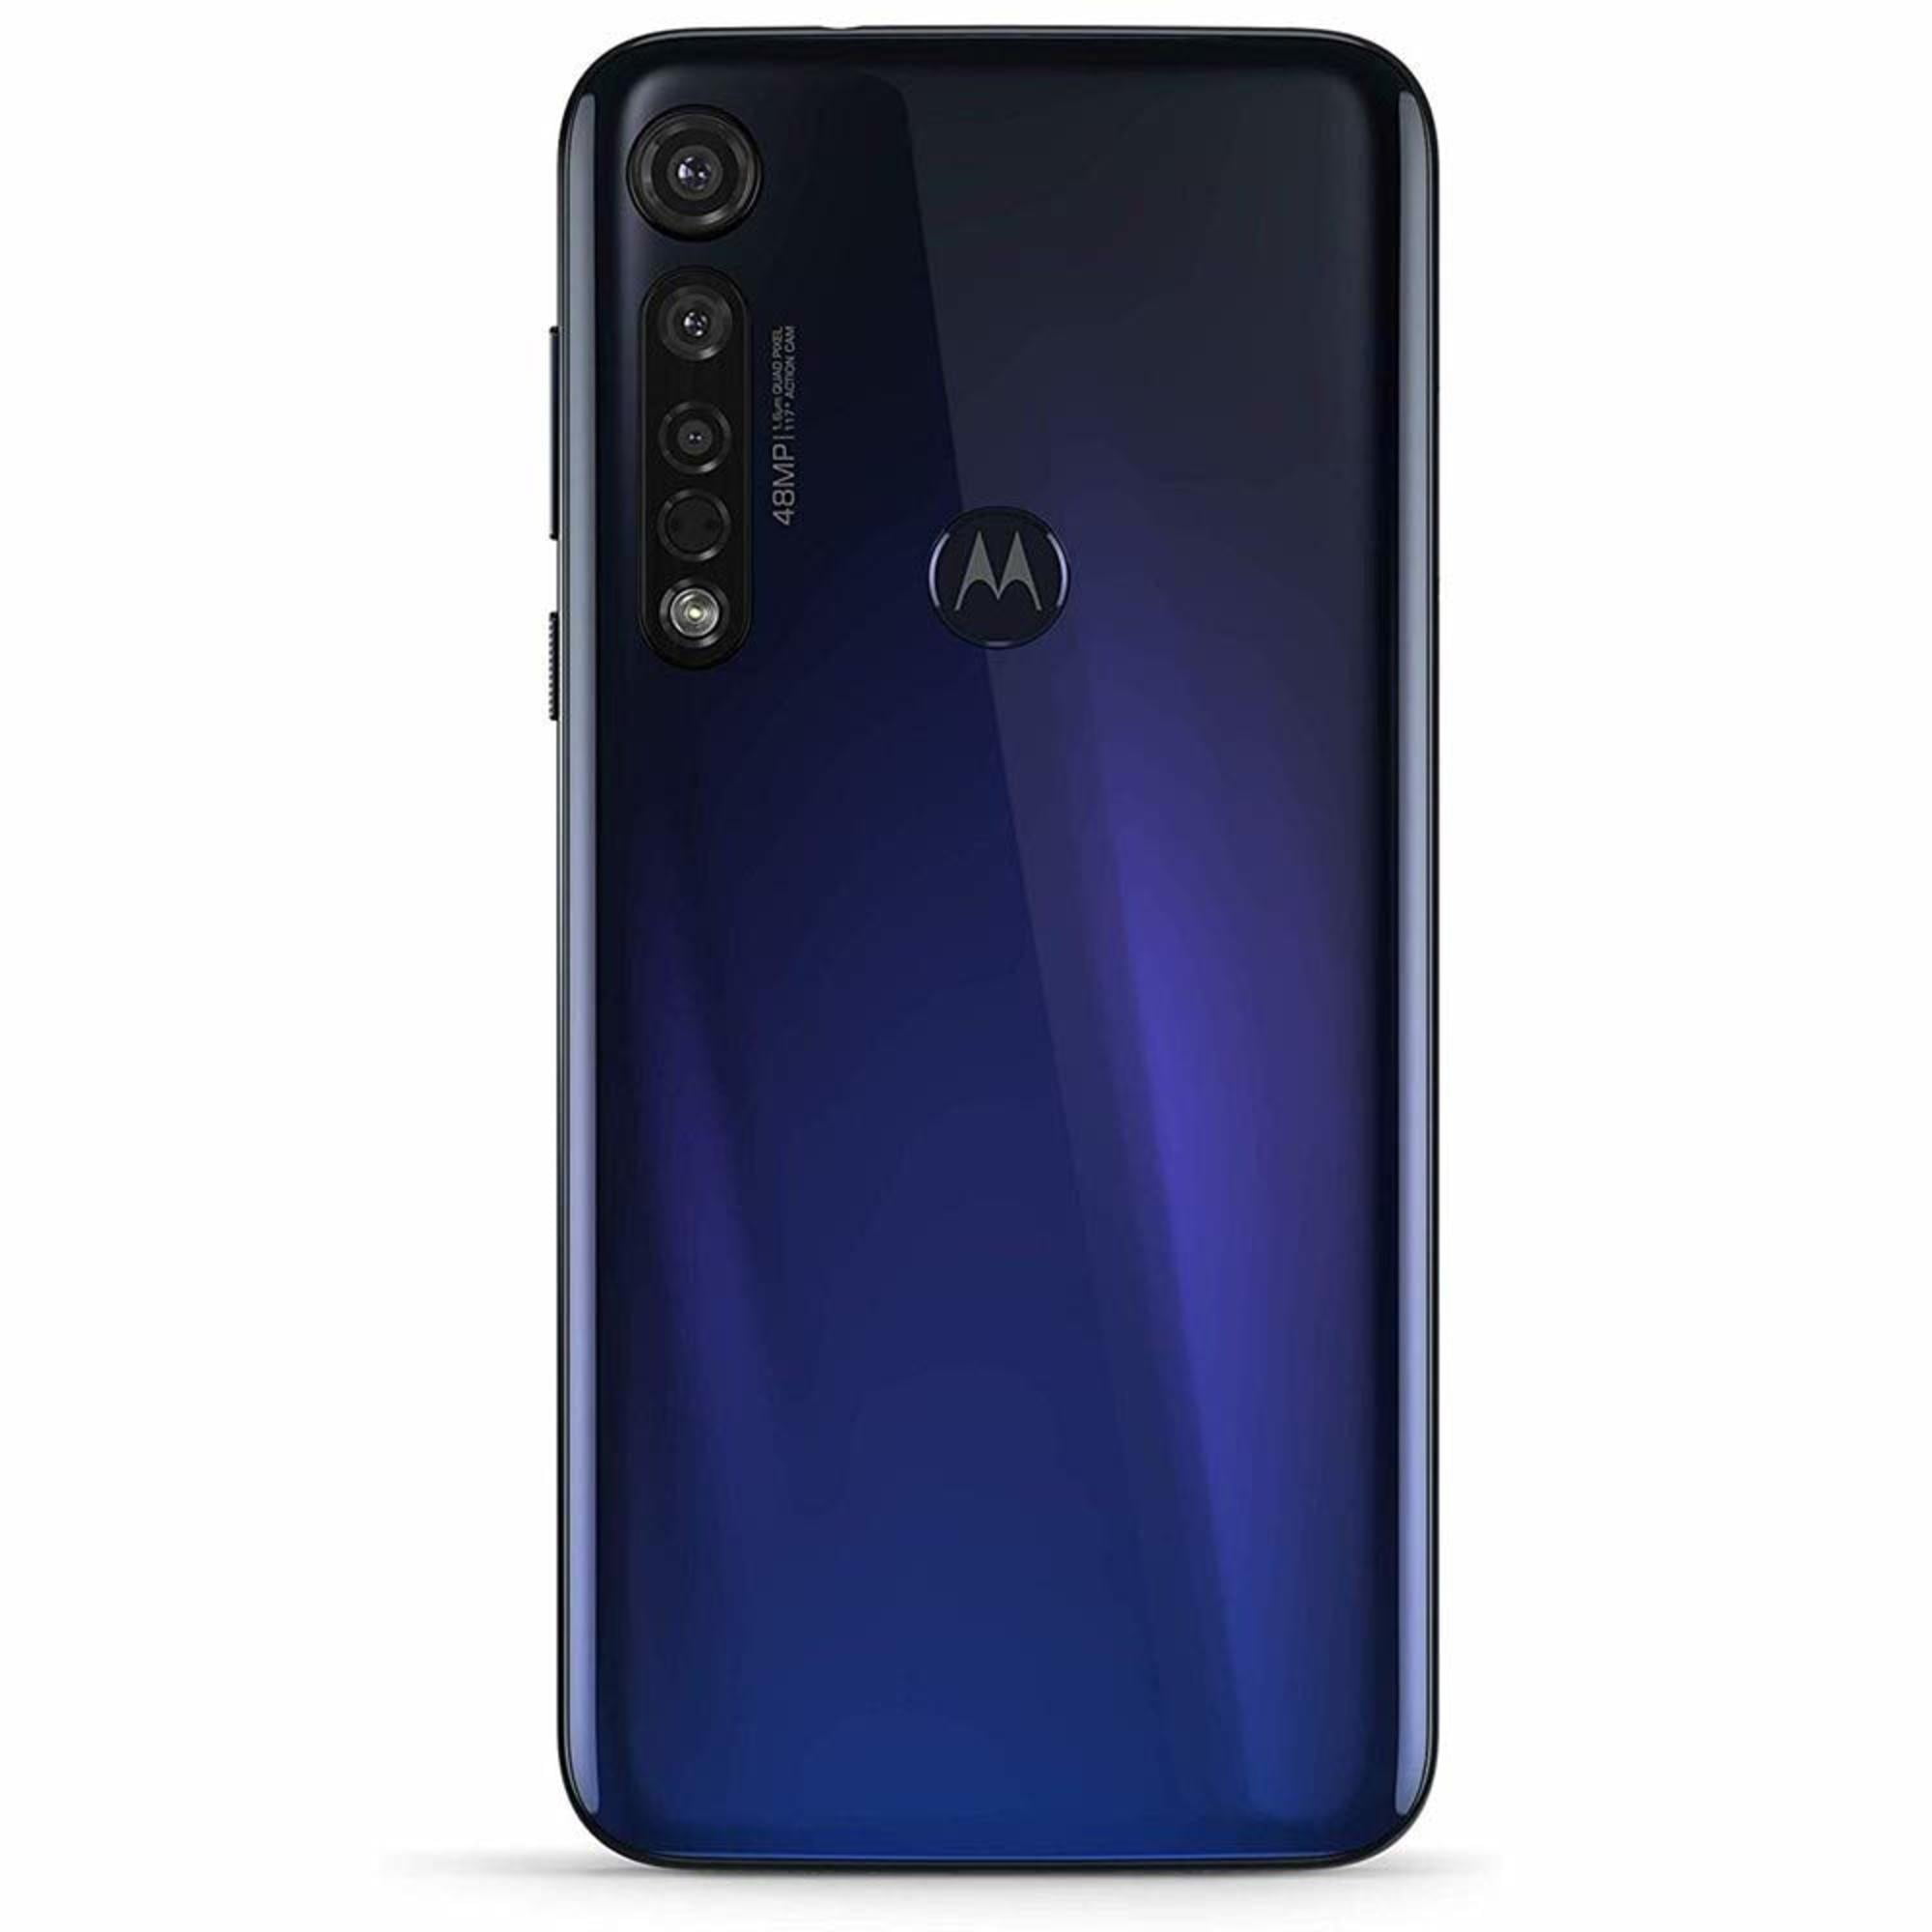 Motorola Moto G8 Plus 64GB XT2019-2 Hybrid Dual SIM GSM Unlocked Phone -  Cosmic Blue